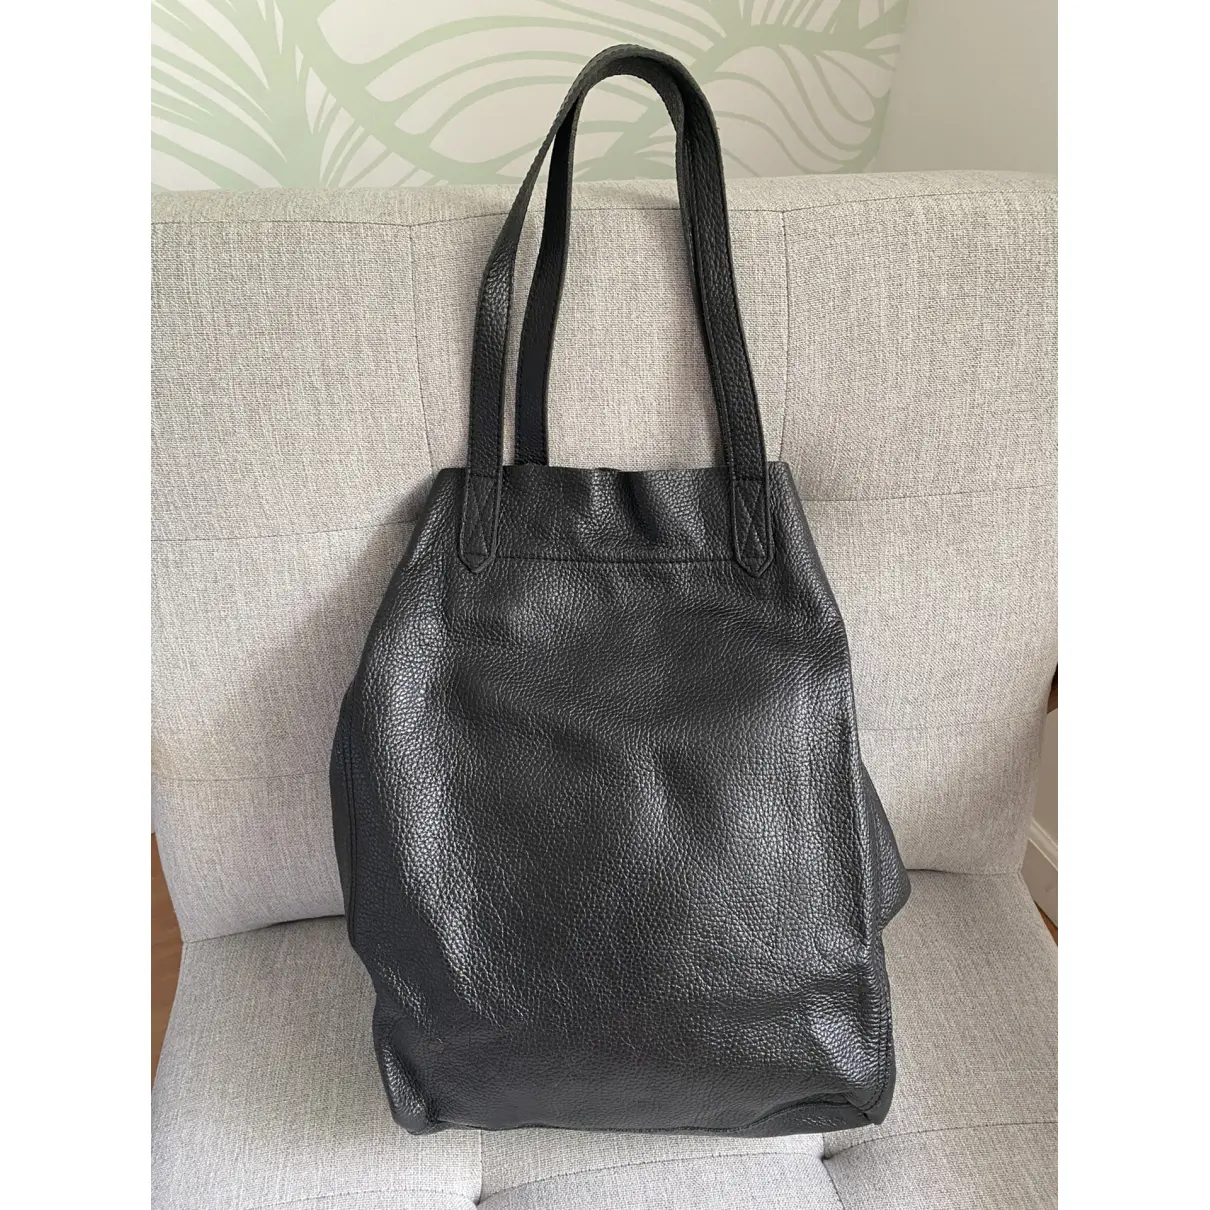 Buy Cuyana Leather handbag online